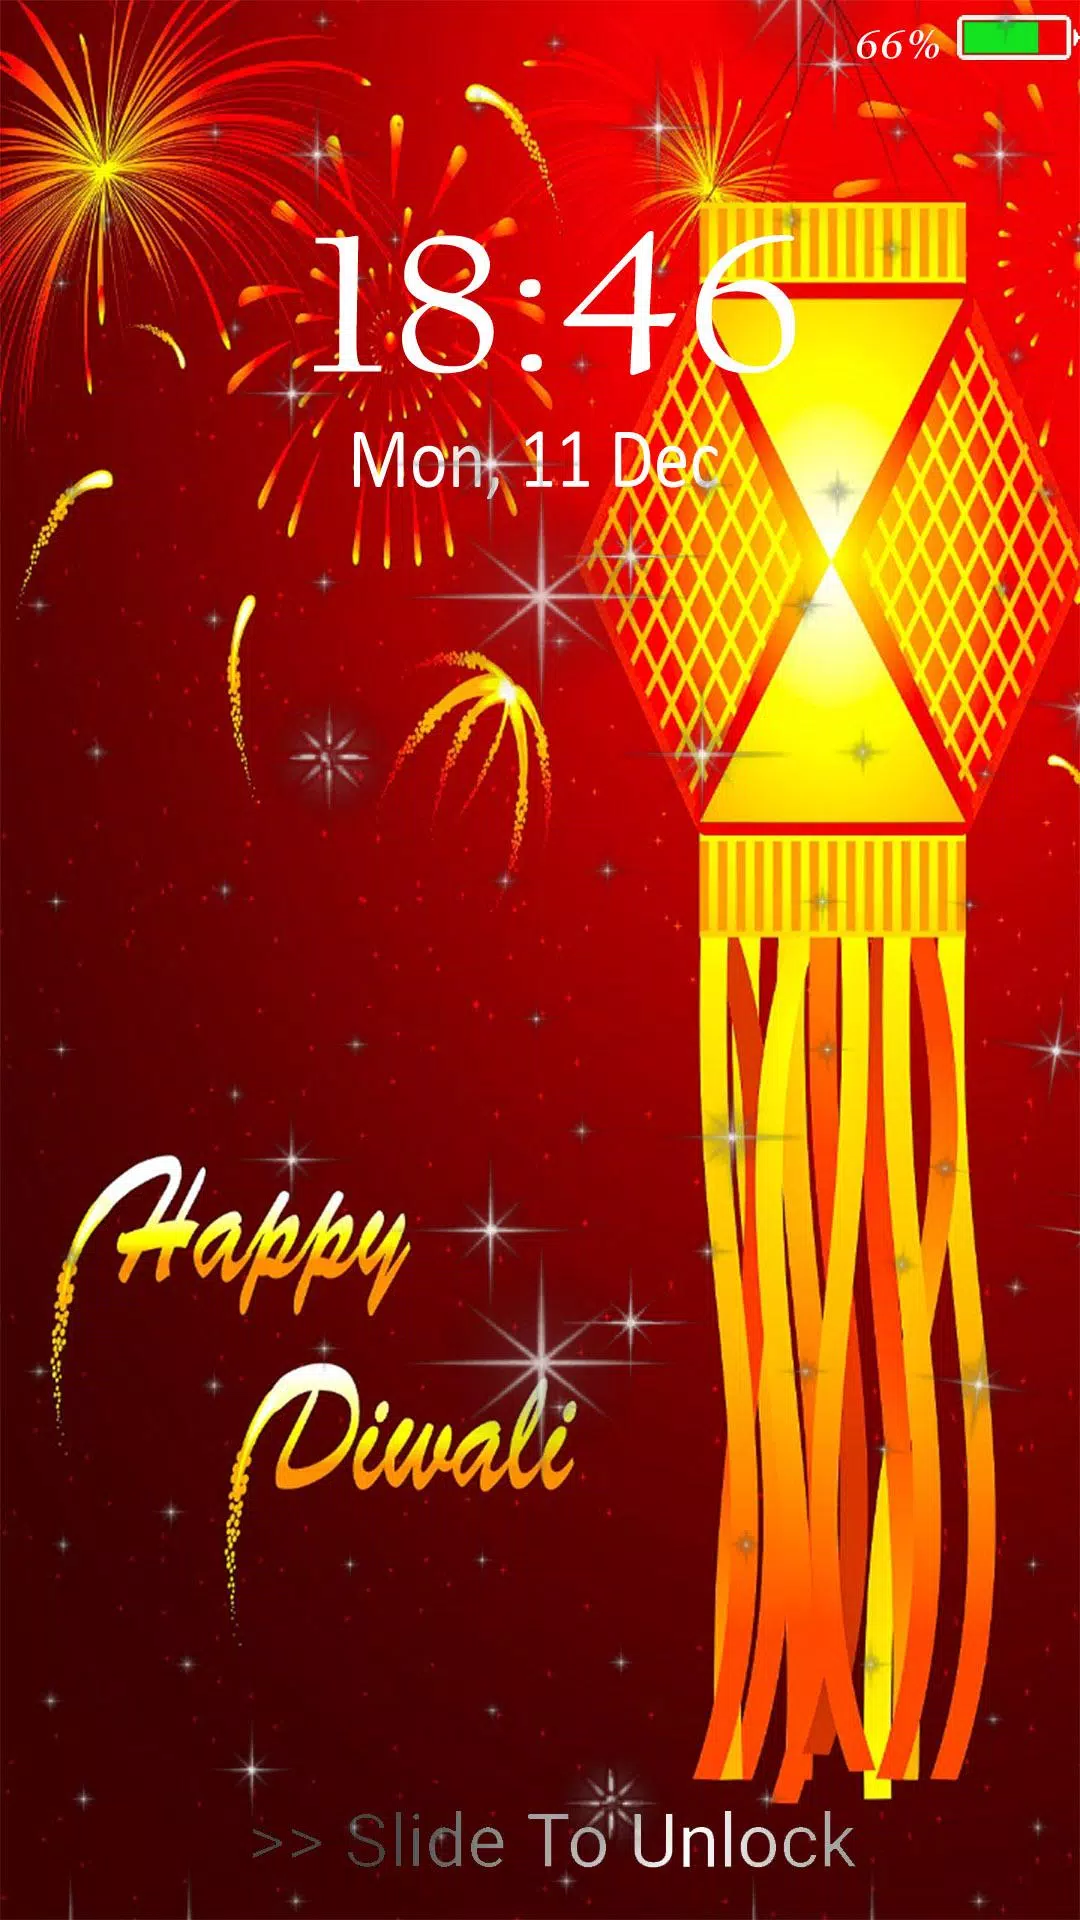 Diwali live wallpaper & Lock screen APK for Android Download